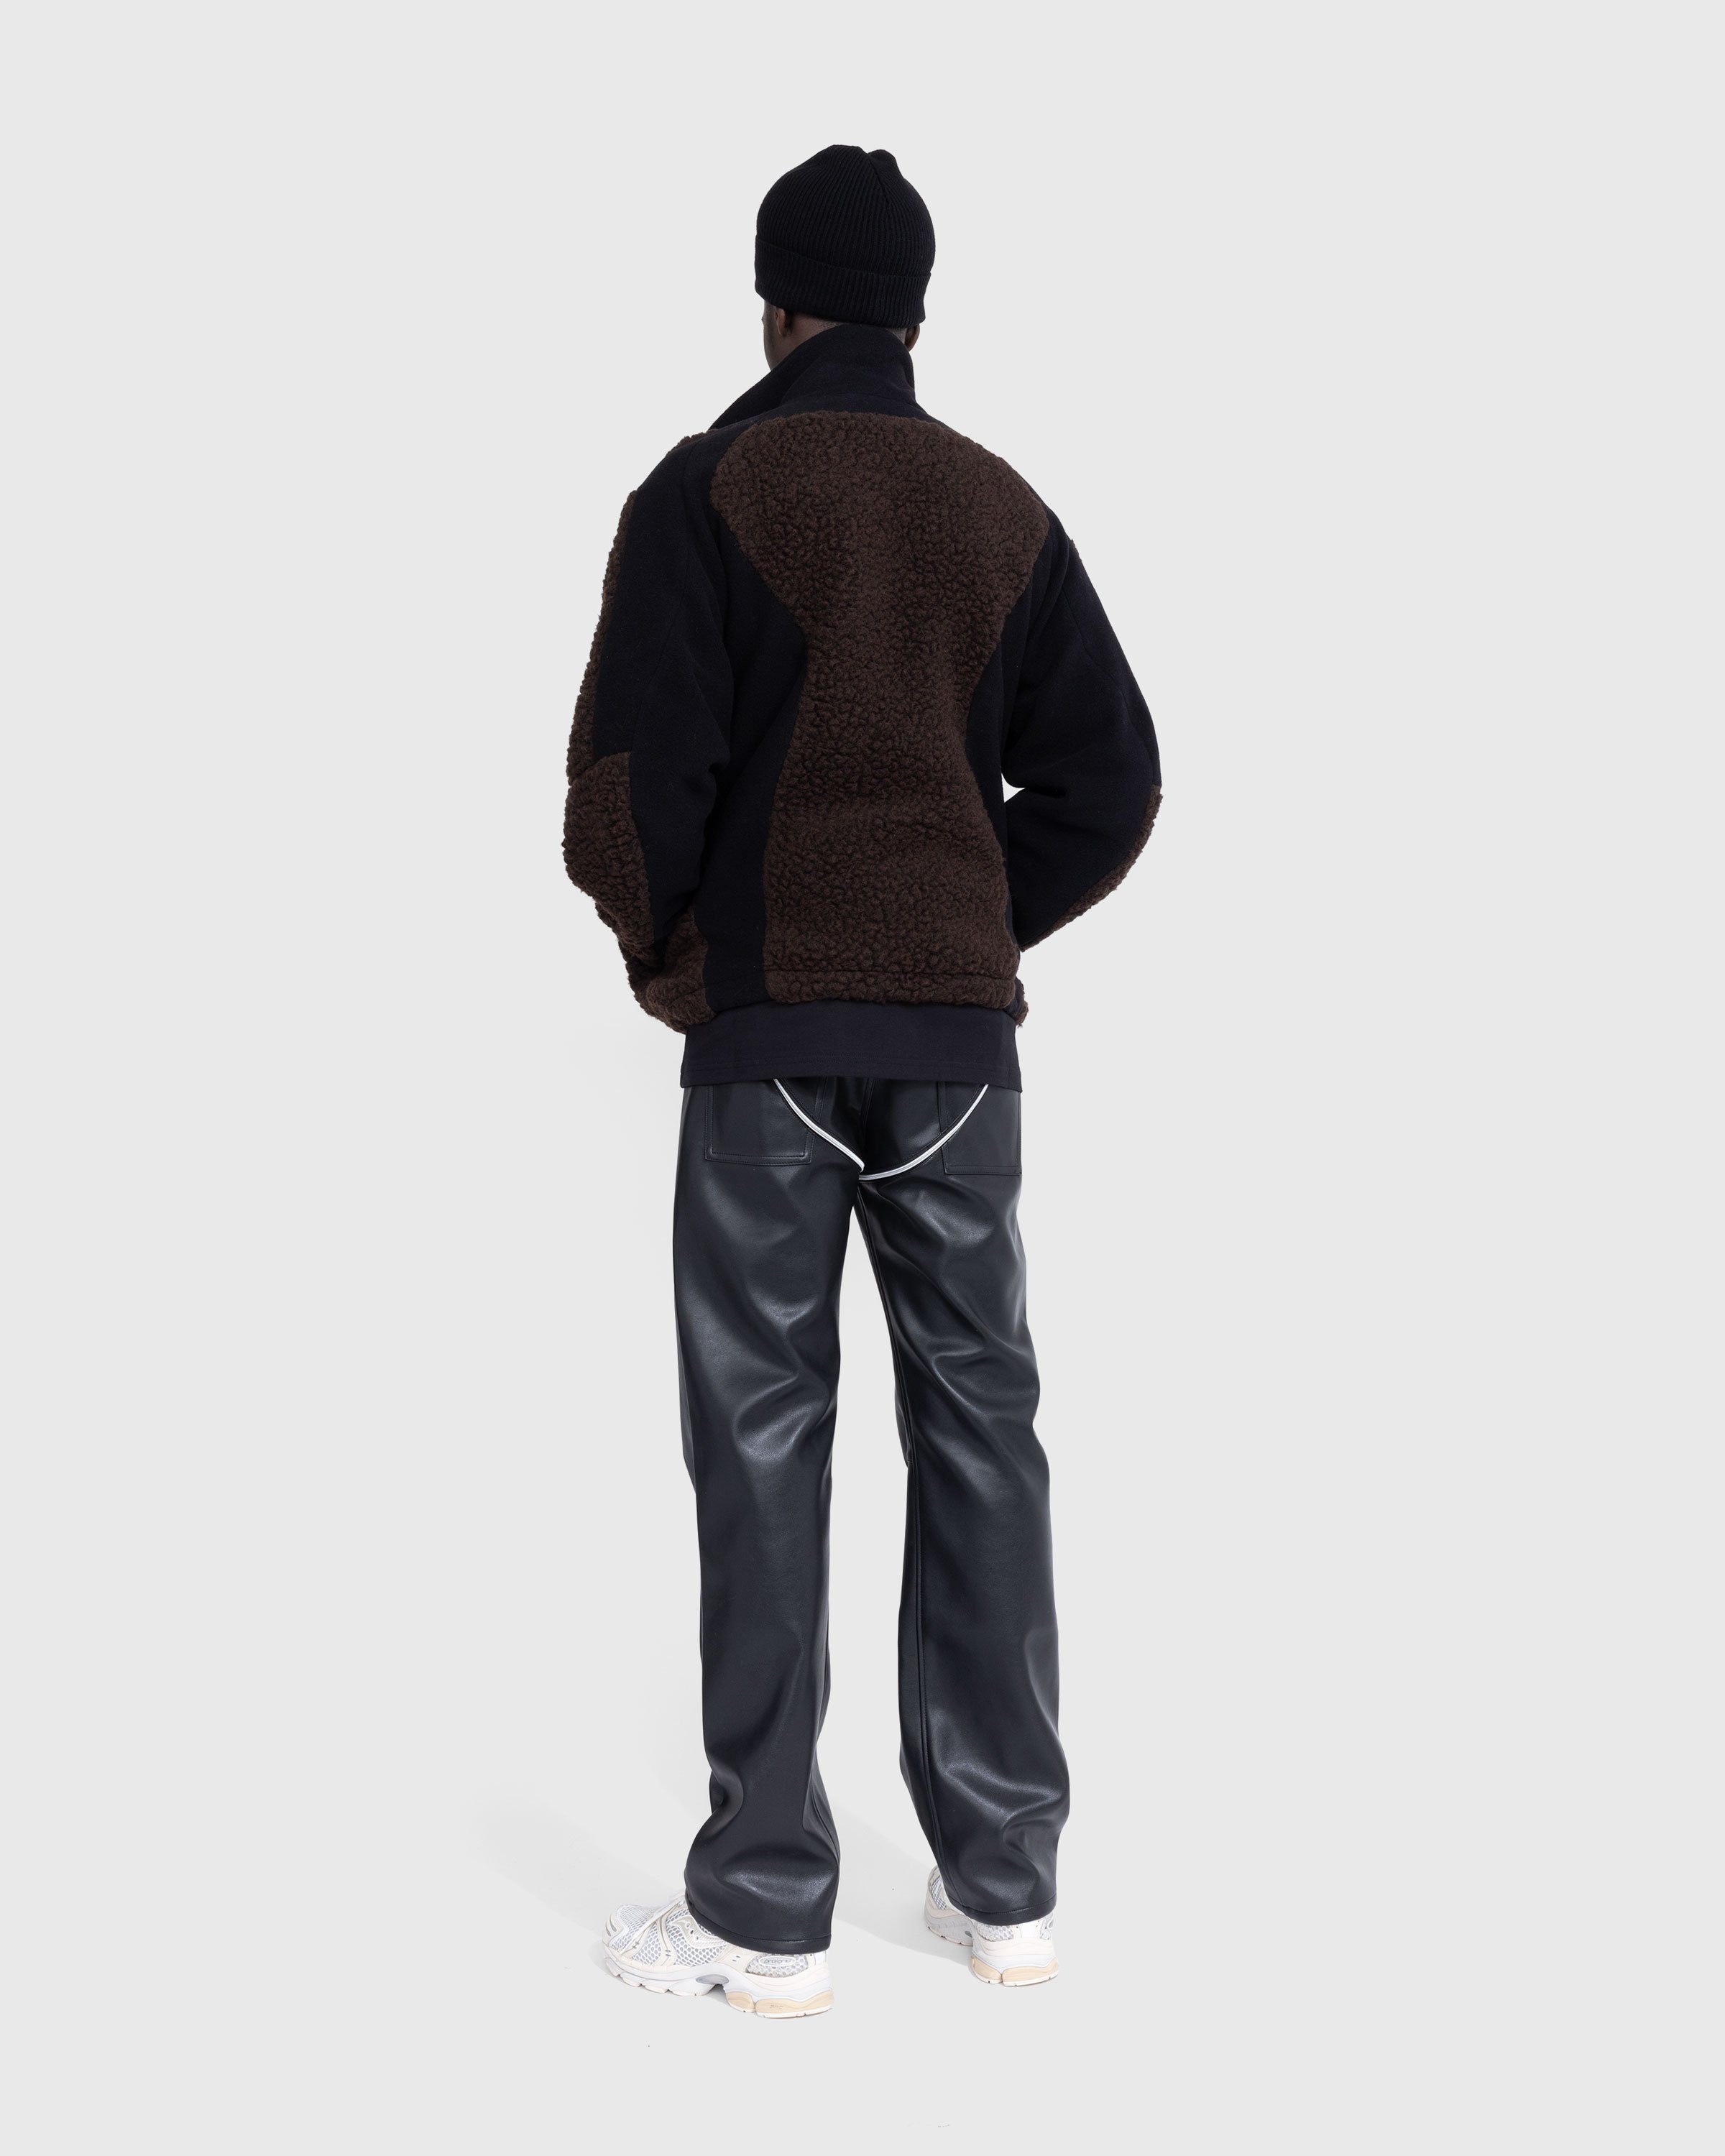 GmbH - Ercan Fleece Jacket Black/Brown - Clothing - Multi - Image 4